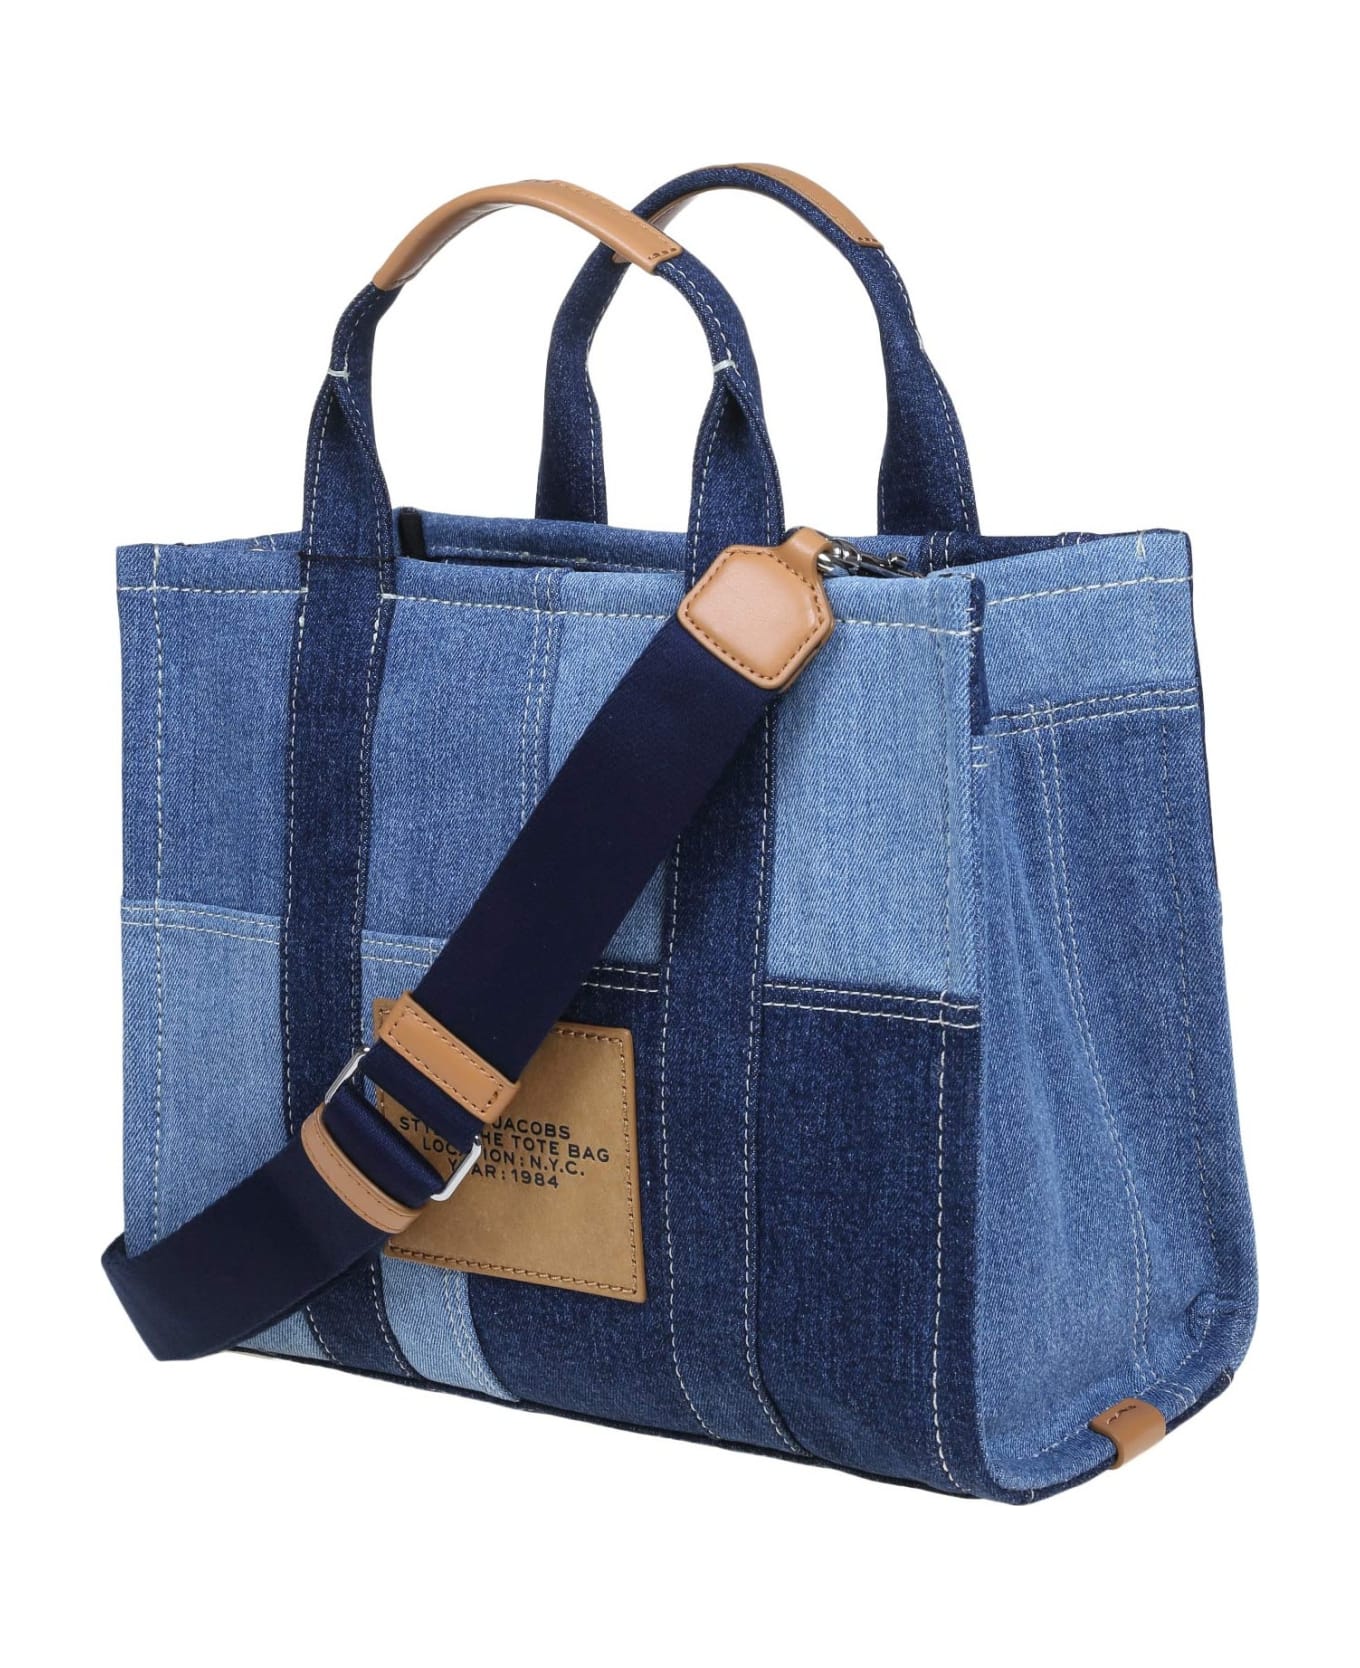 Marc Jacobs The Medium Bag In Blue Denim Jeans - Blue Denim